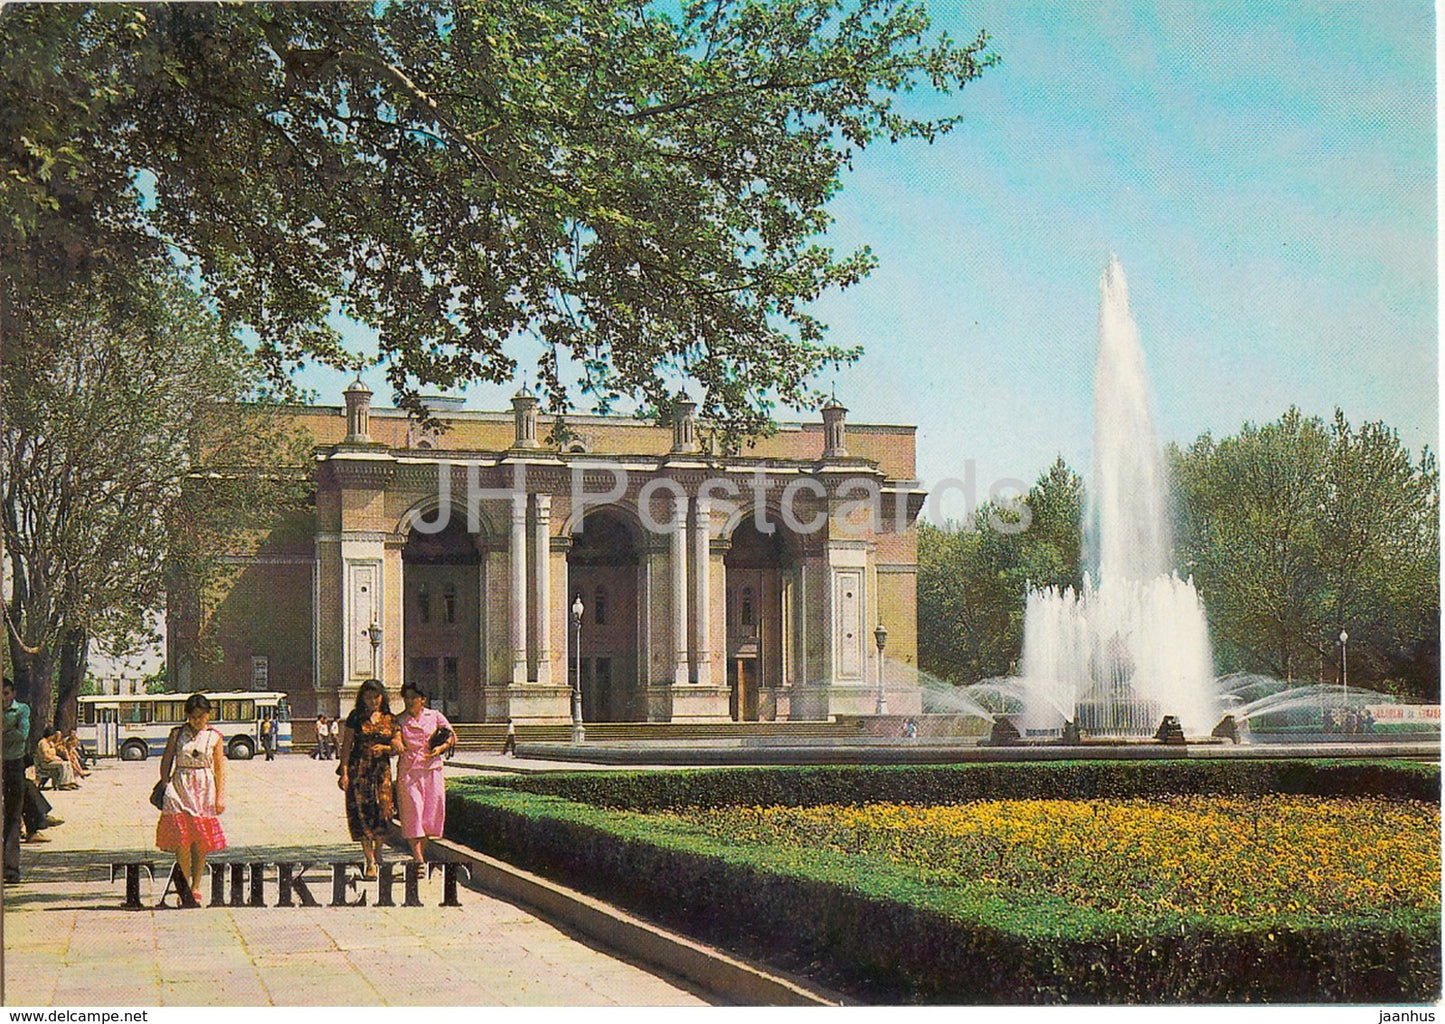 Tashkent - Teatralnaya Square - The State Alisher Navoi Opera and Ballet Theatre - 1983 - Uzbekistan USSR - unused - JH Postcards